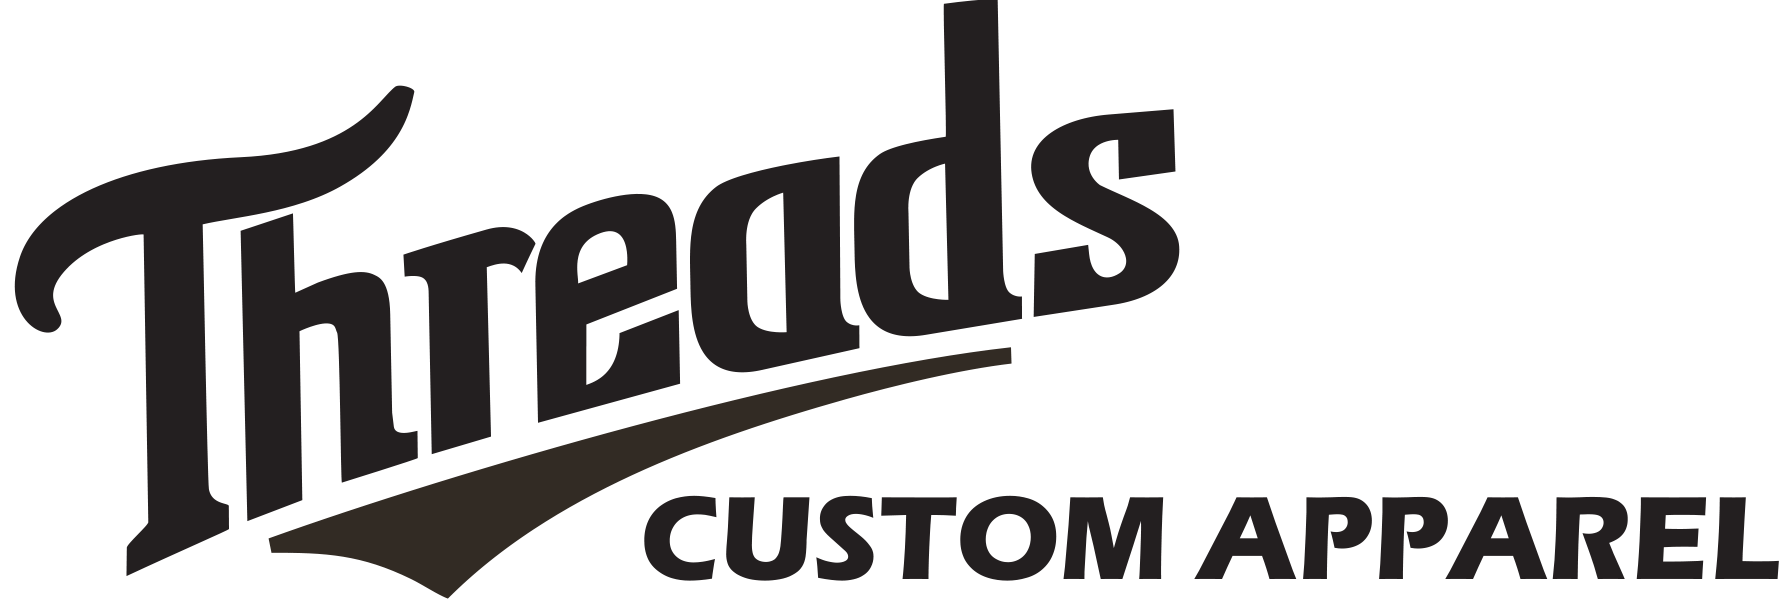 Custom Apparel Logo - Threads Custom Apparel | Chatfield, MN